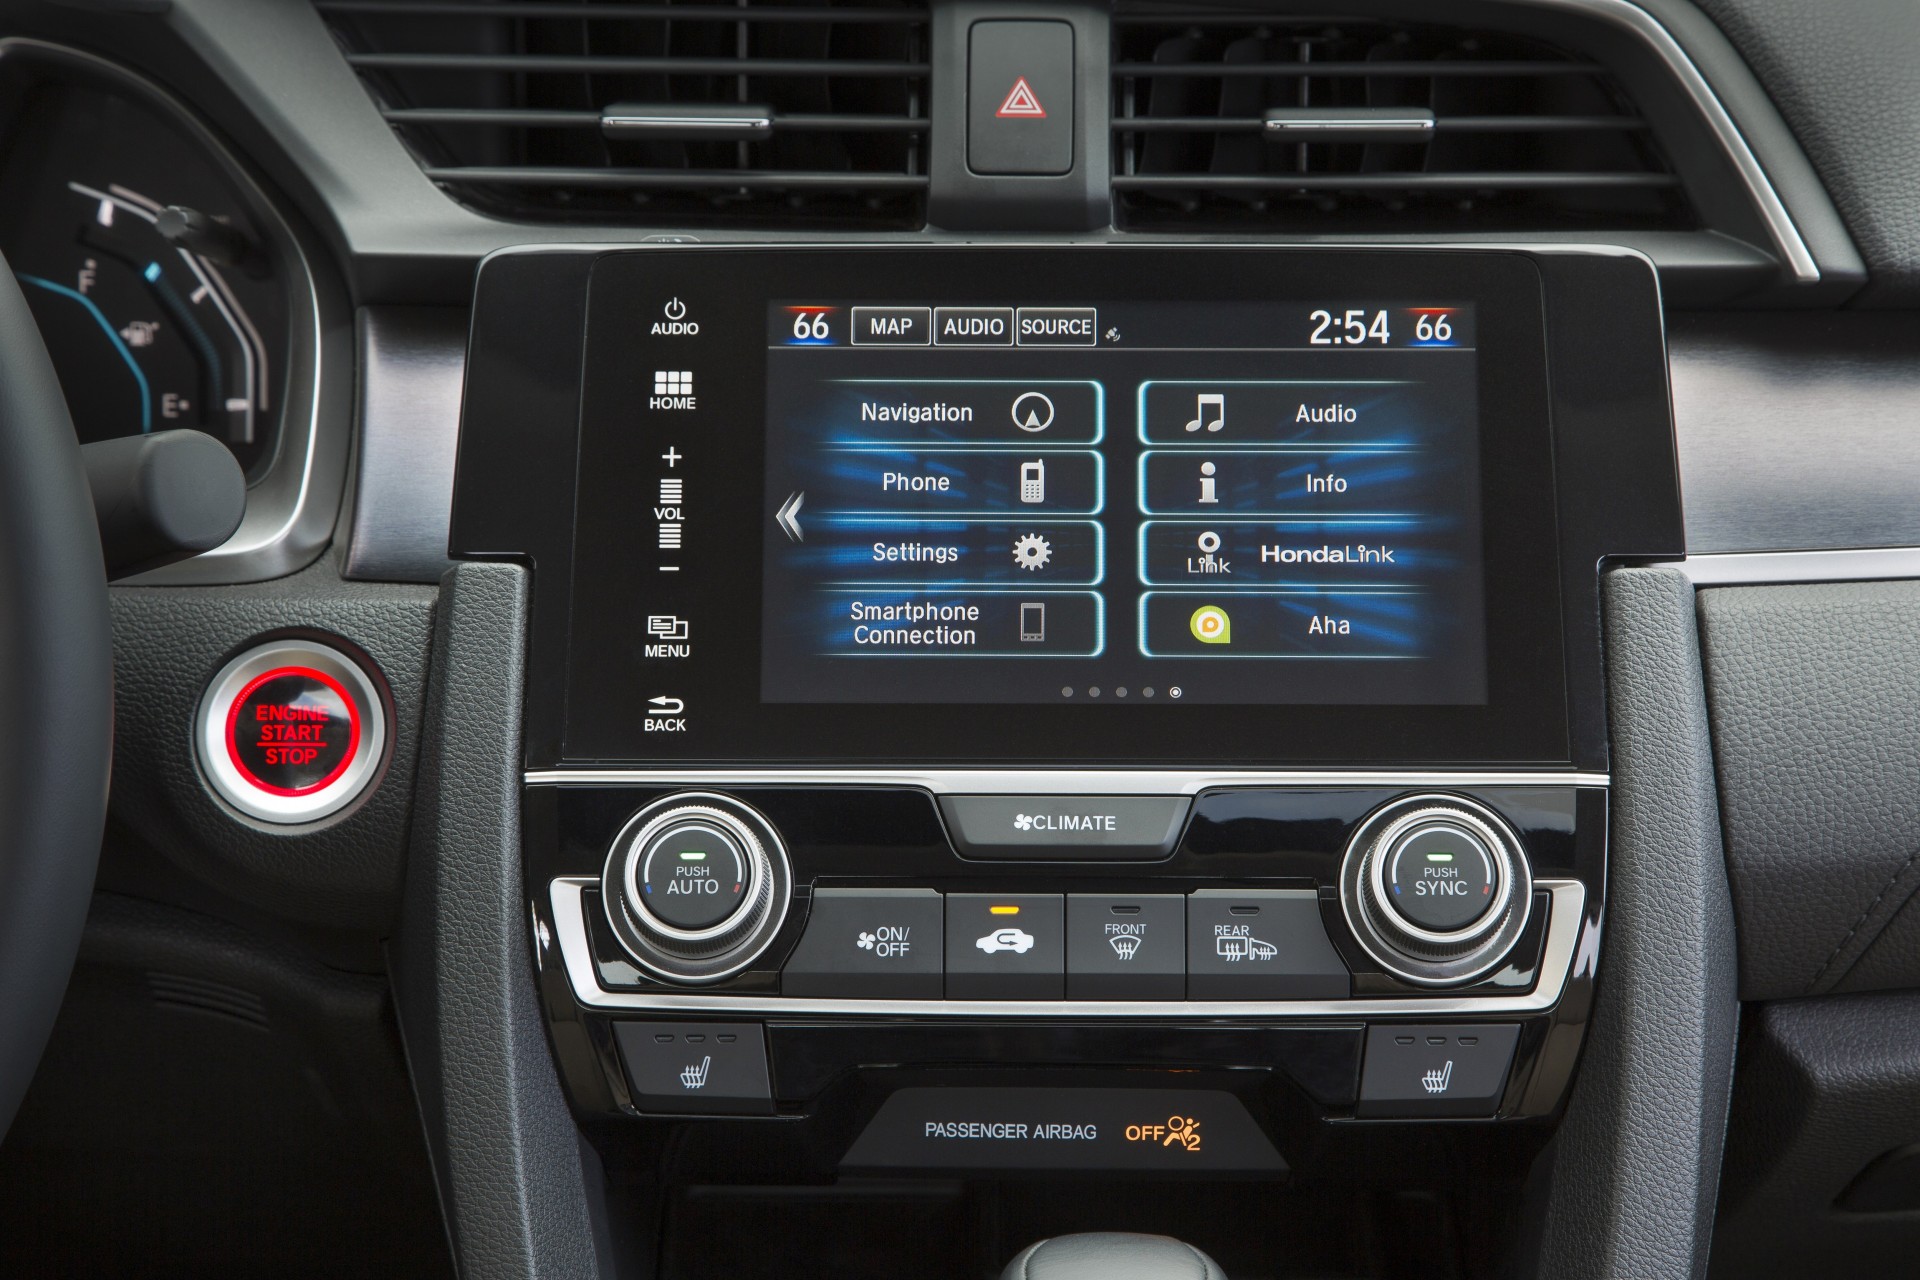 2016 Honda Civic supports Android Auto and Apple CarPlay!